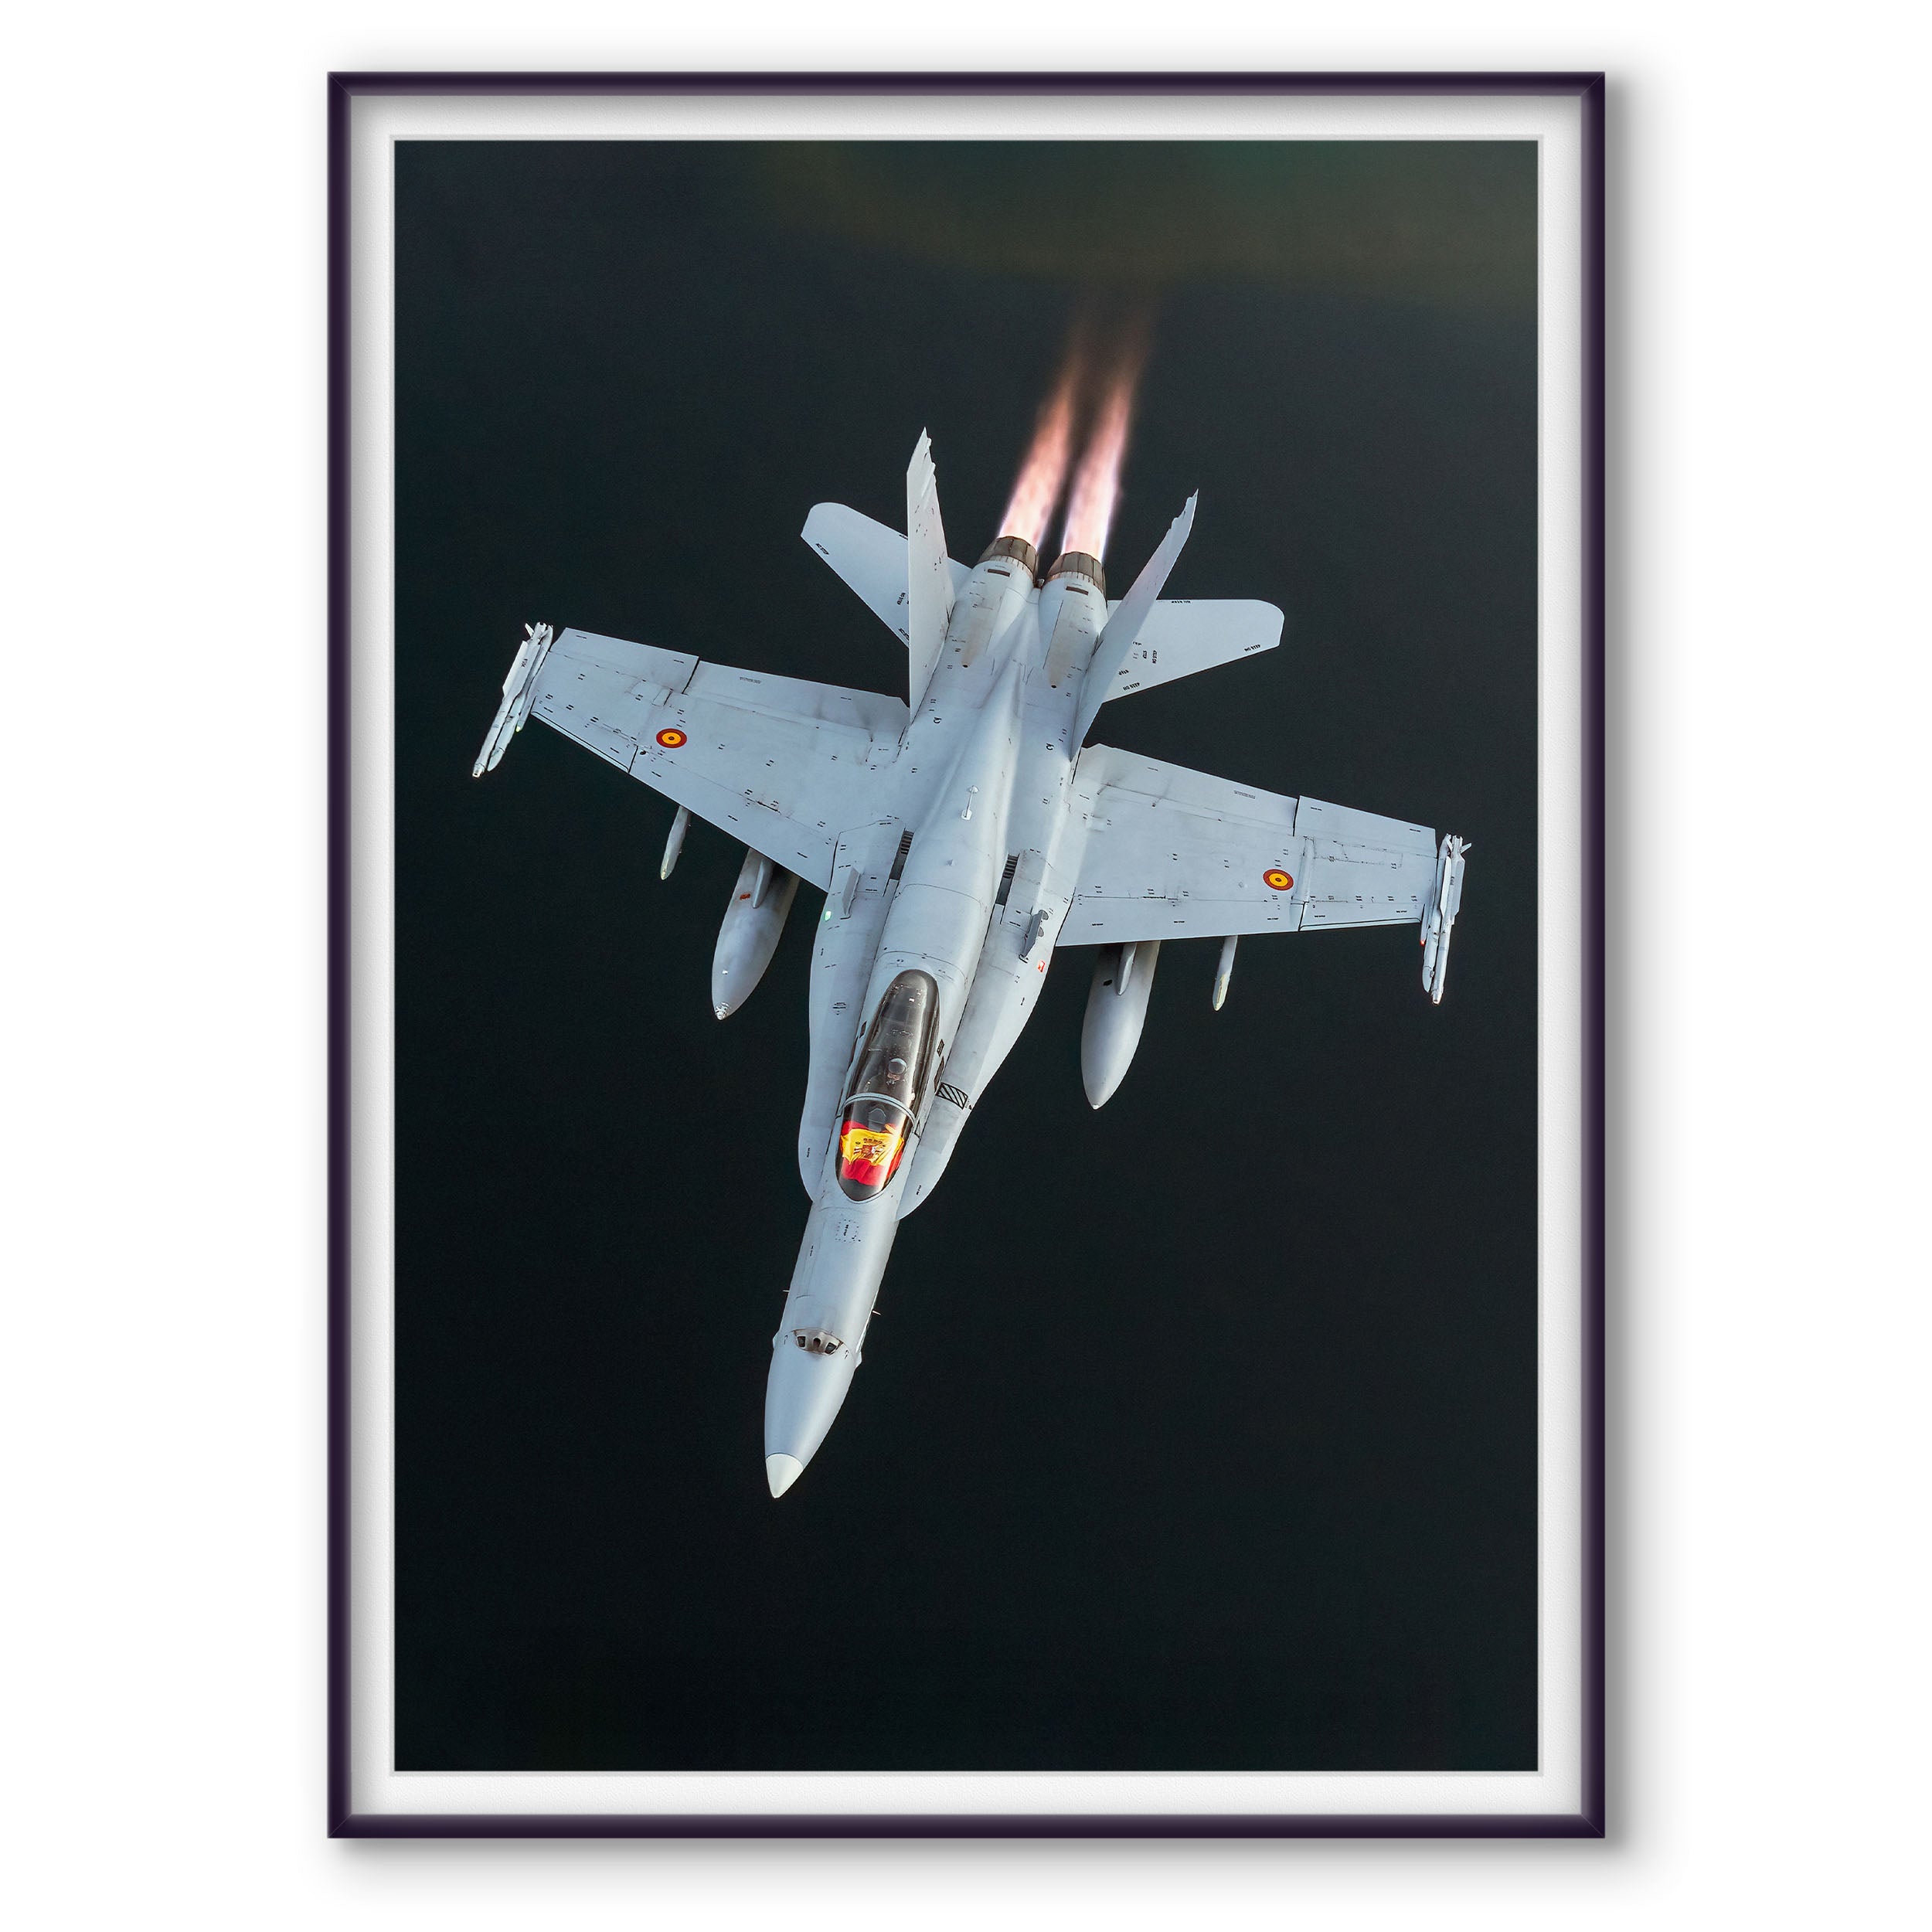 Spanish F/A-18 Hornet